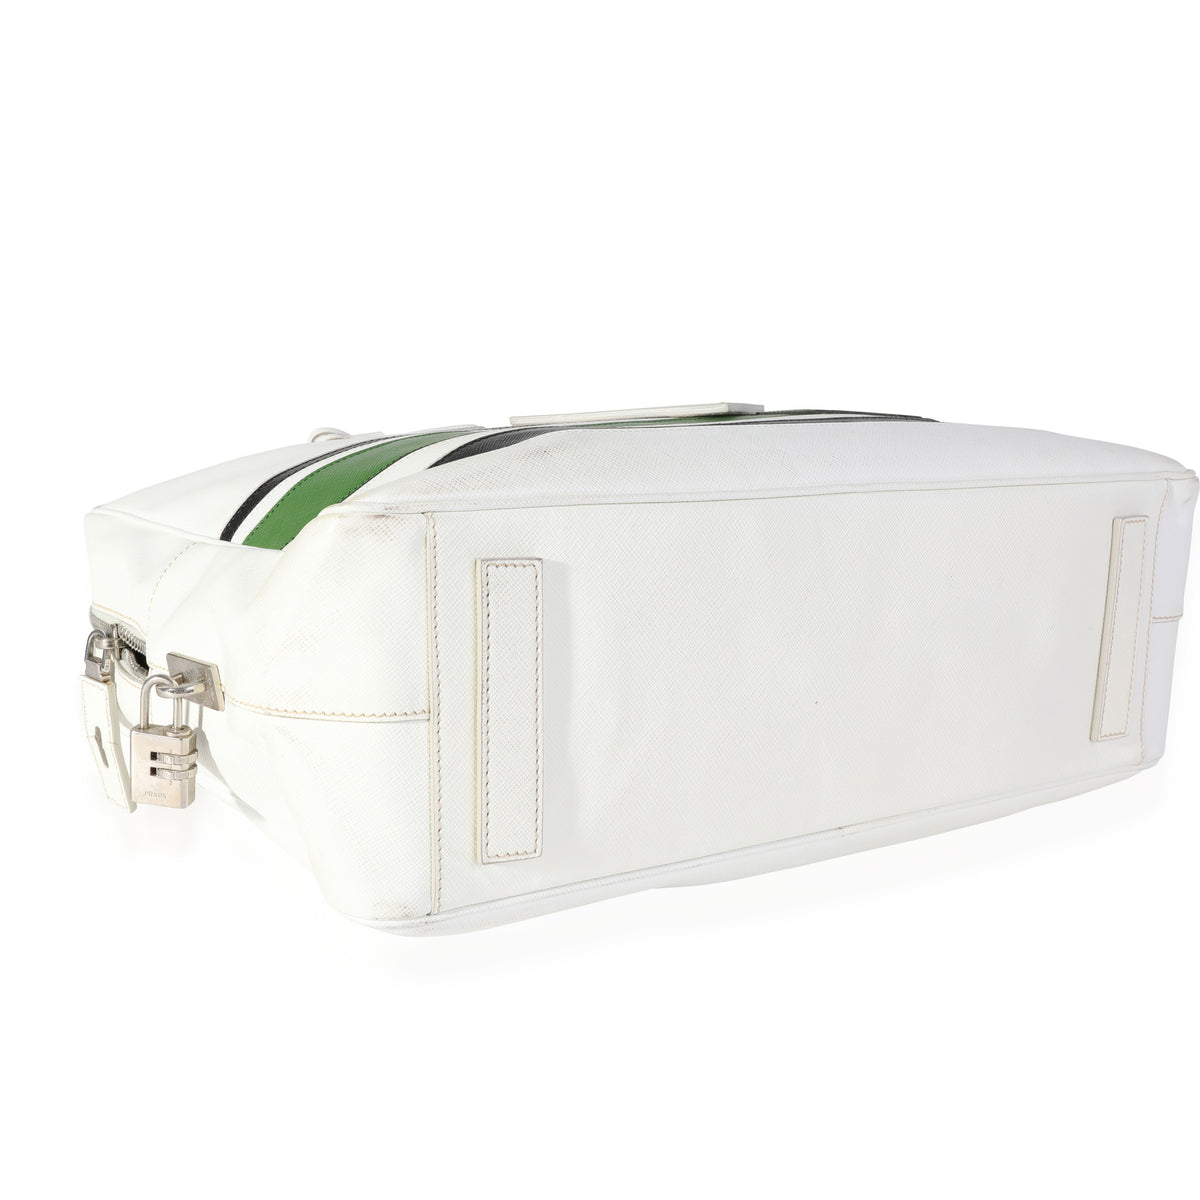 Prada White Saffiano Leather Crossbody Saddle Bag, myGemma